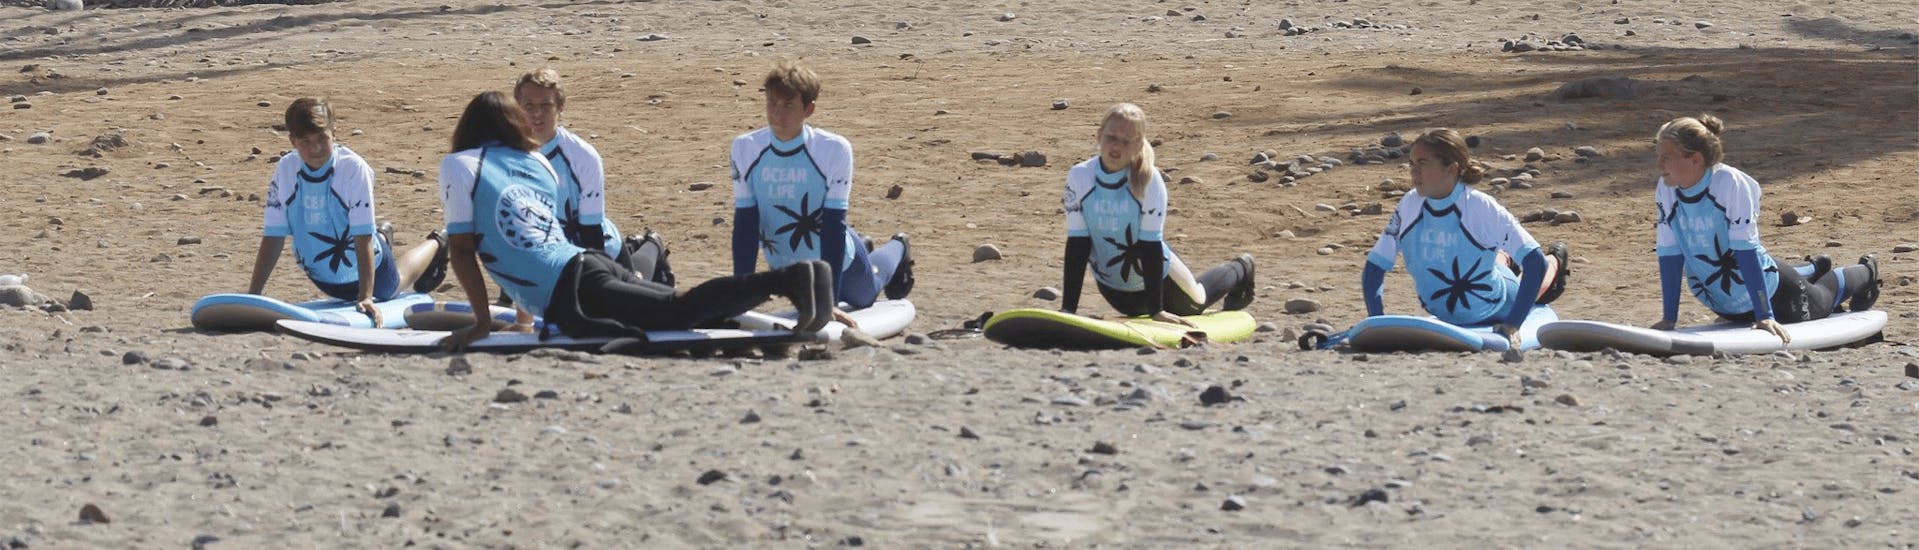 surfing-lessons-advanced-ocean-life-surf-school-hero